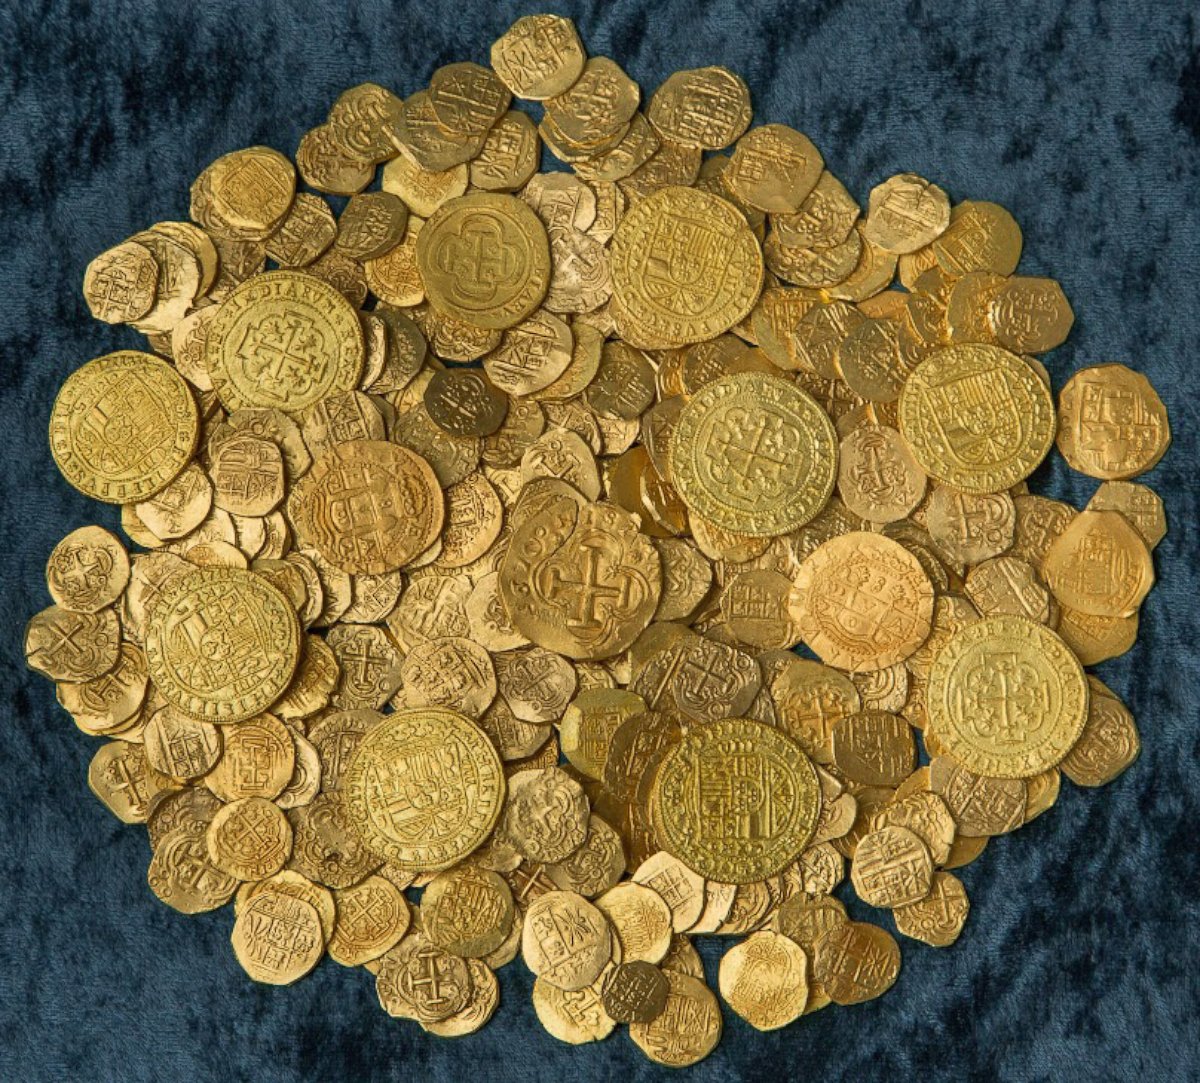 Treasure Hunters Retrieve $4.5 Million in Gold Coins From Sunken Fleet ...